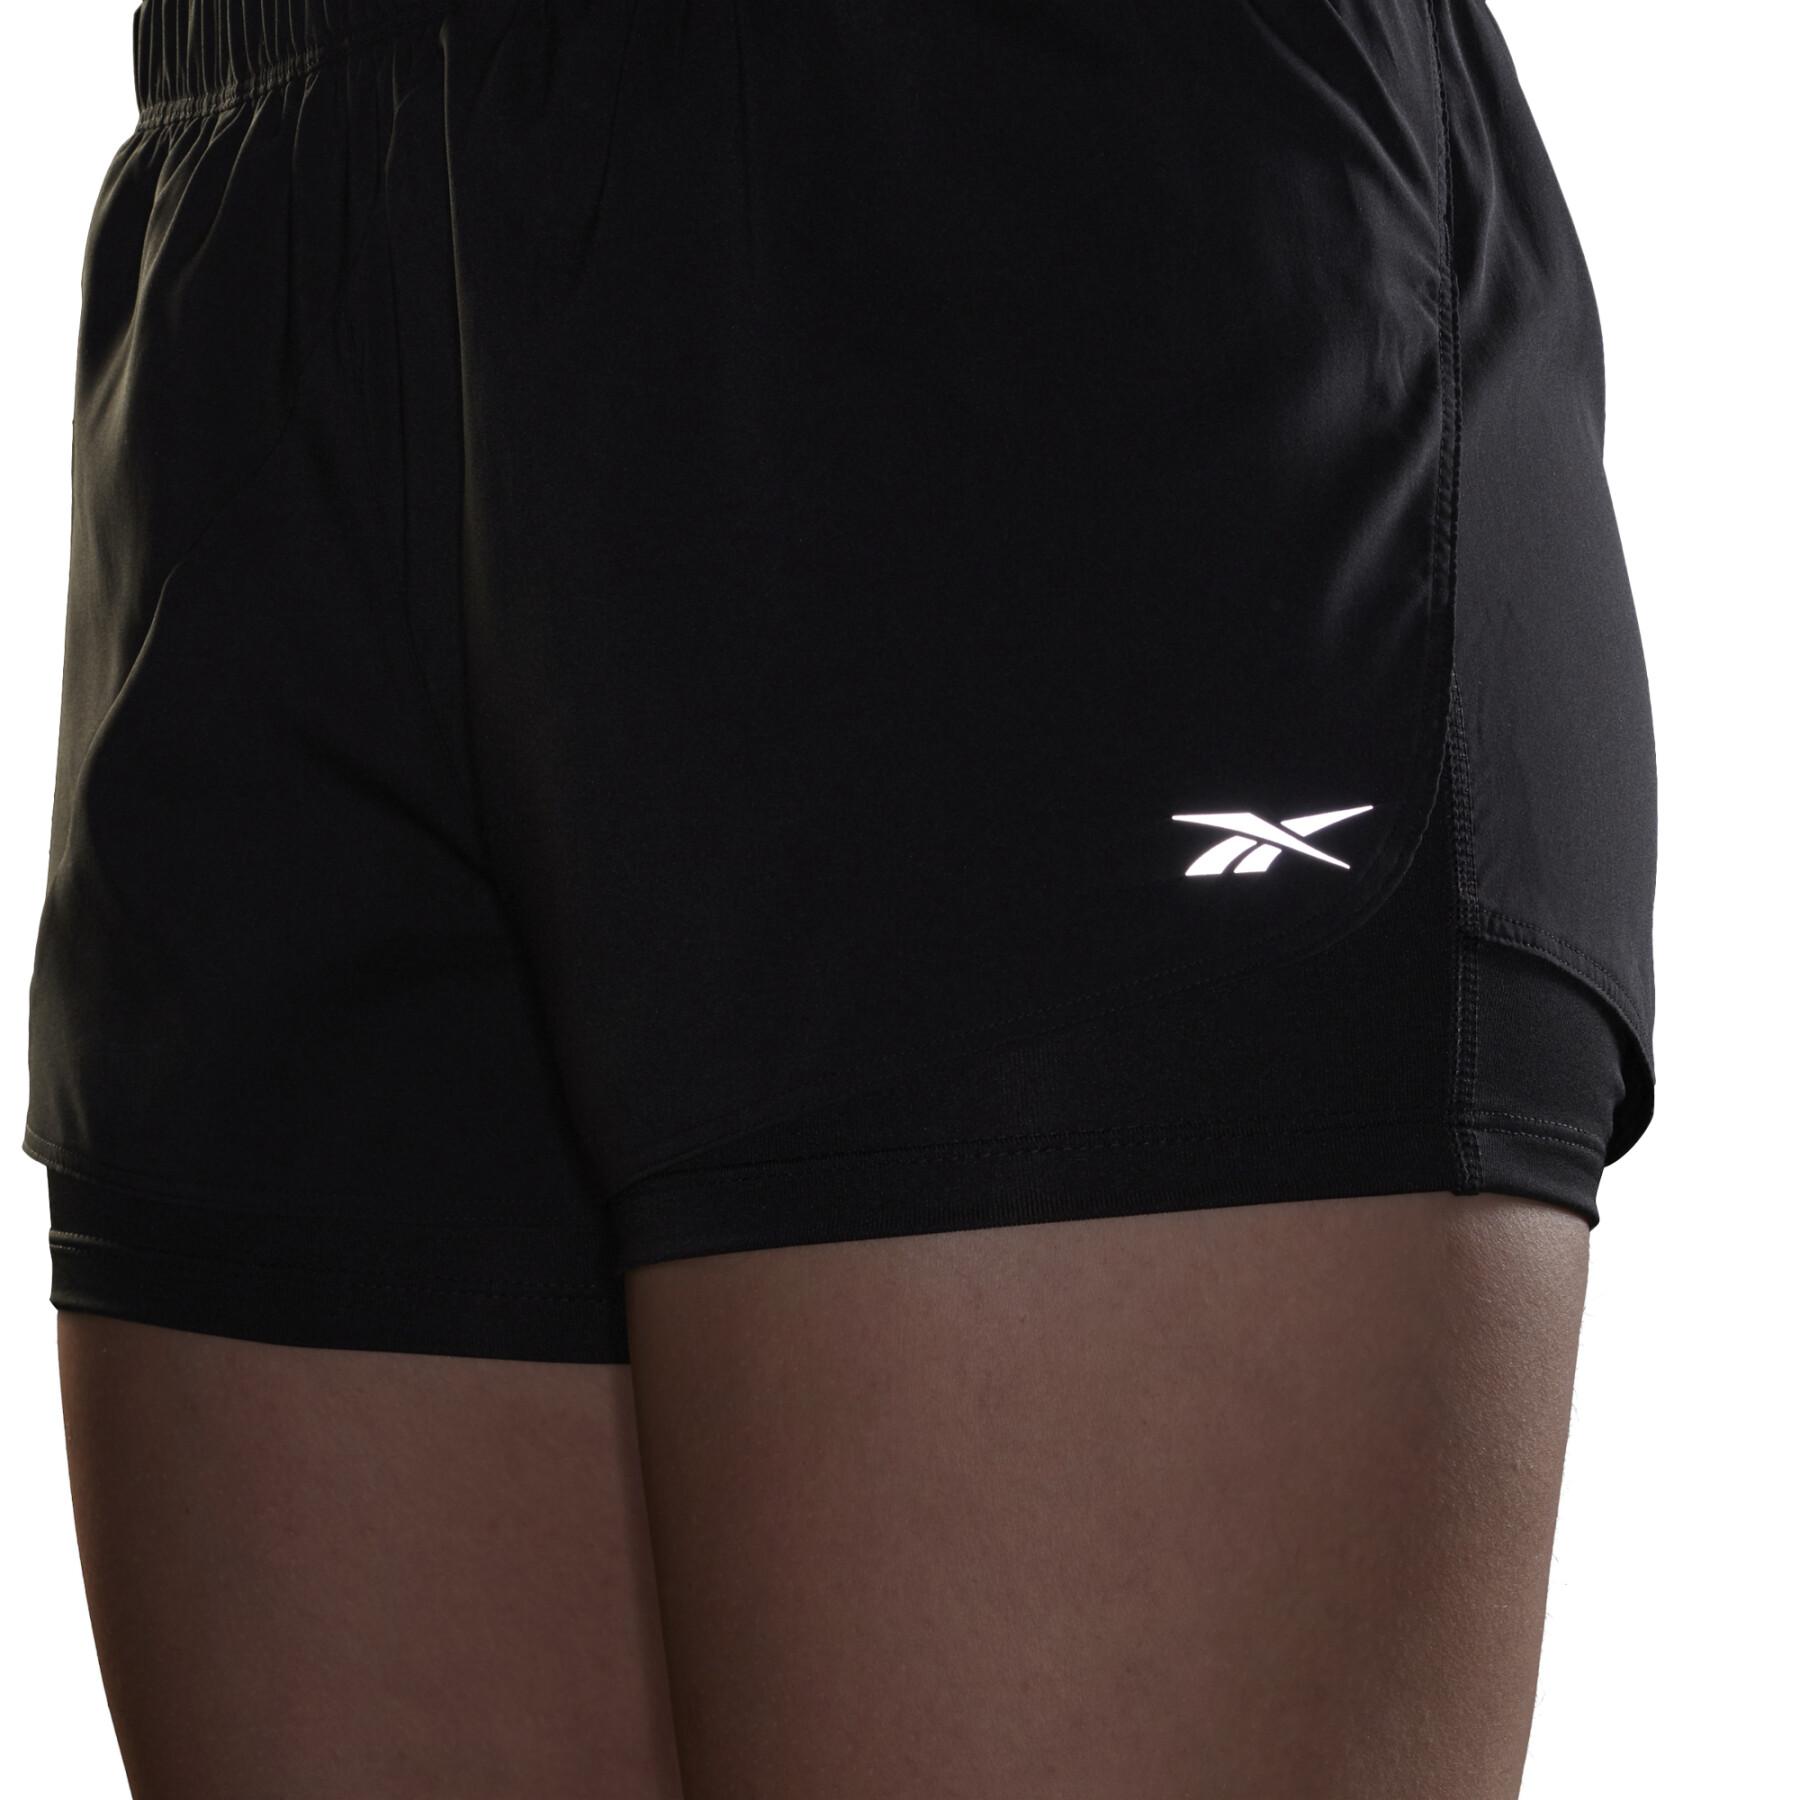 Women's shorts Reebok Running Essentials Two-in-One